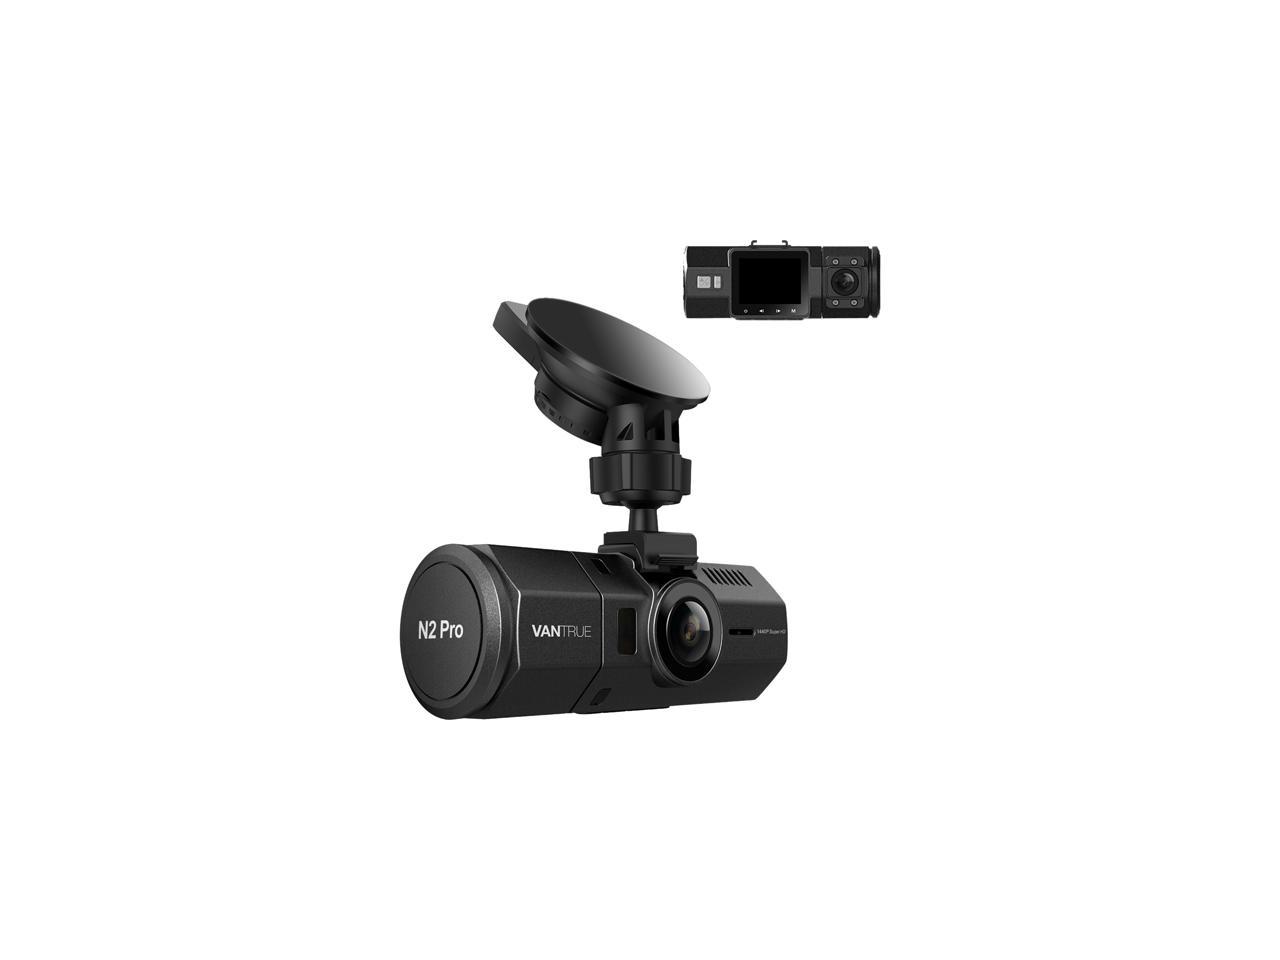 Vantrue N2 Pro-G 1080P Dual Dash Cam $100 + Free Shipping